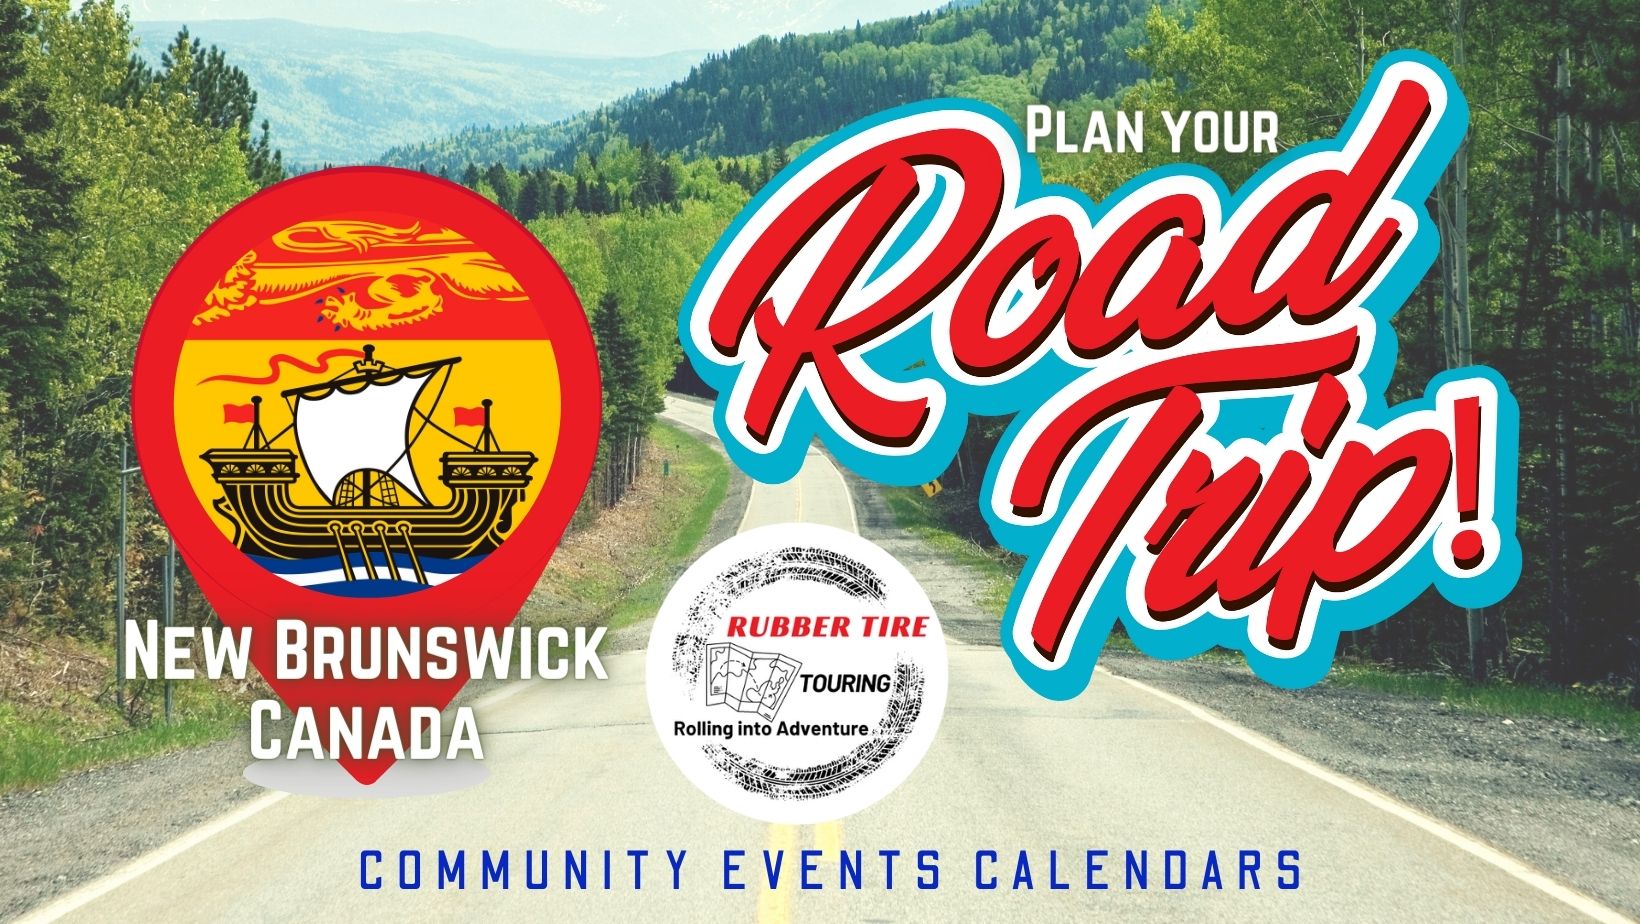 NB Events Calendar - Plan your road trip!